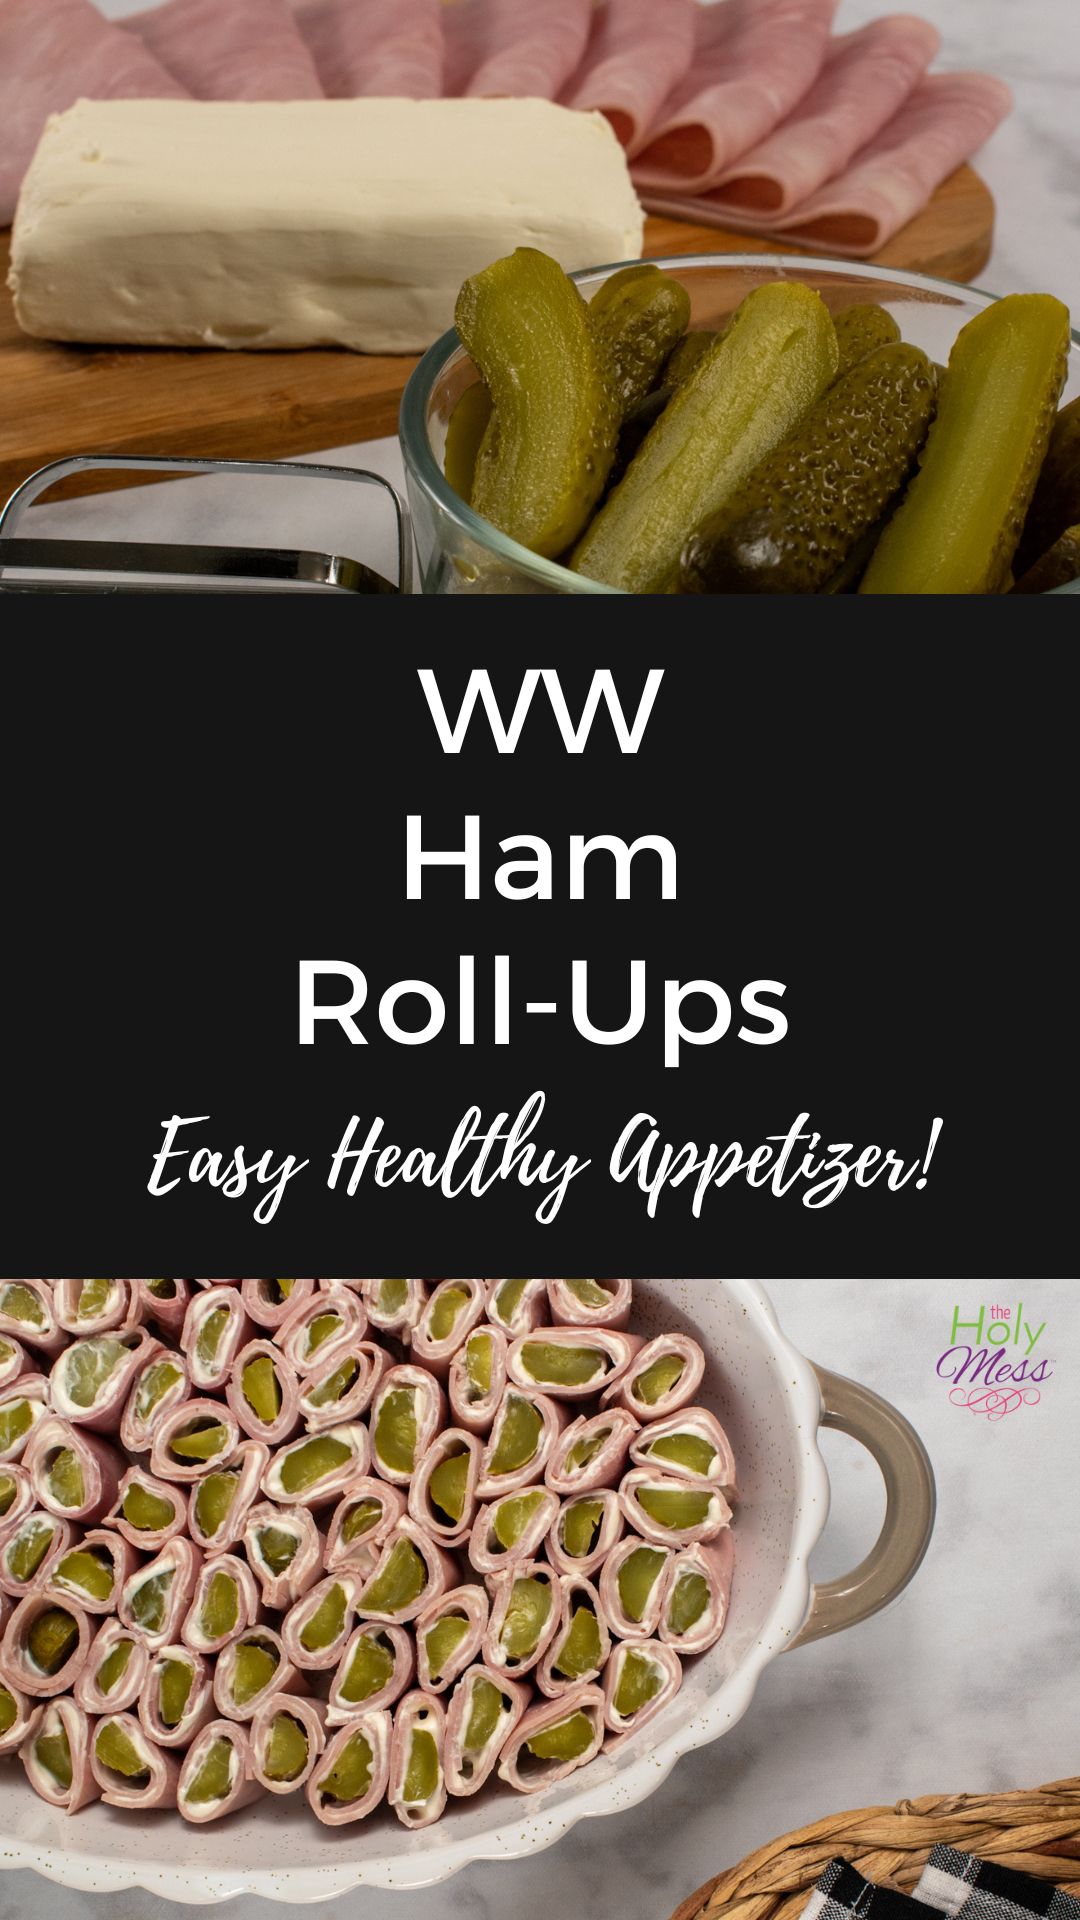 WW ham roll-ups appetizer